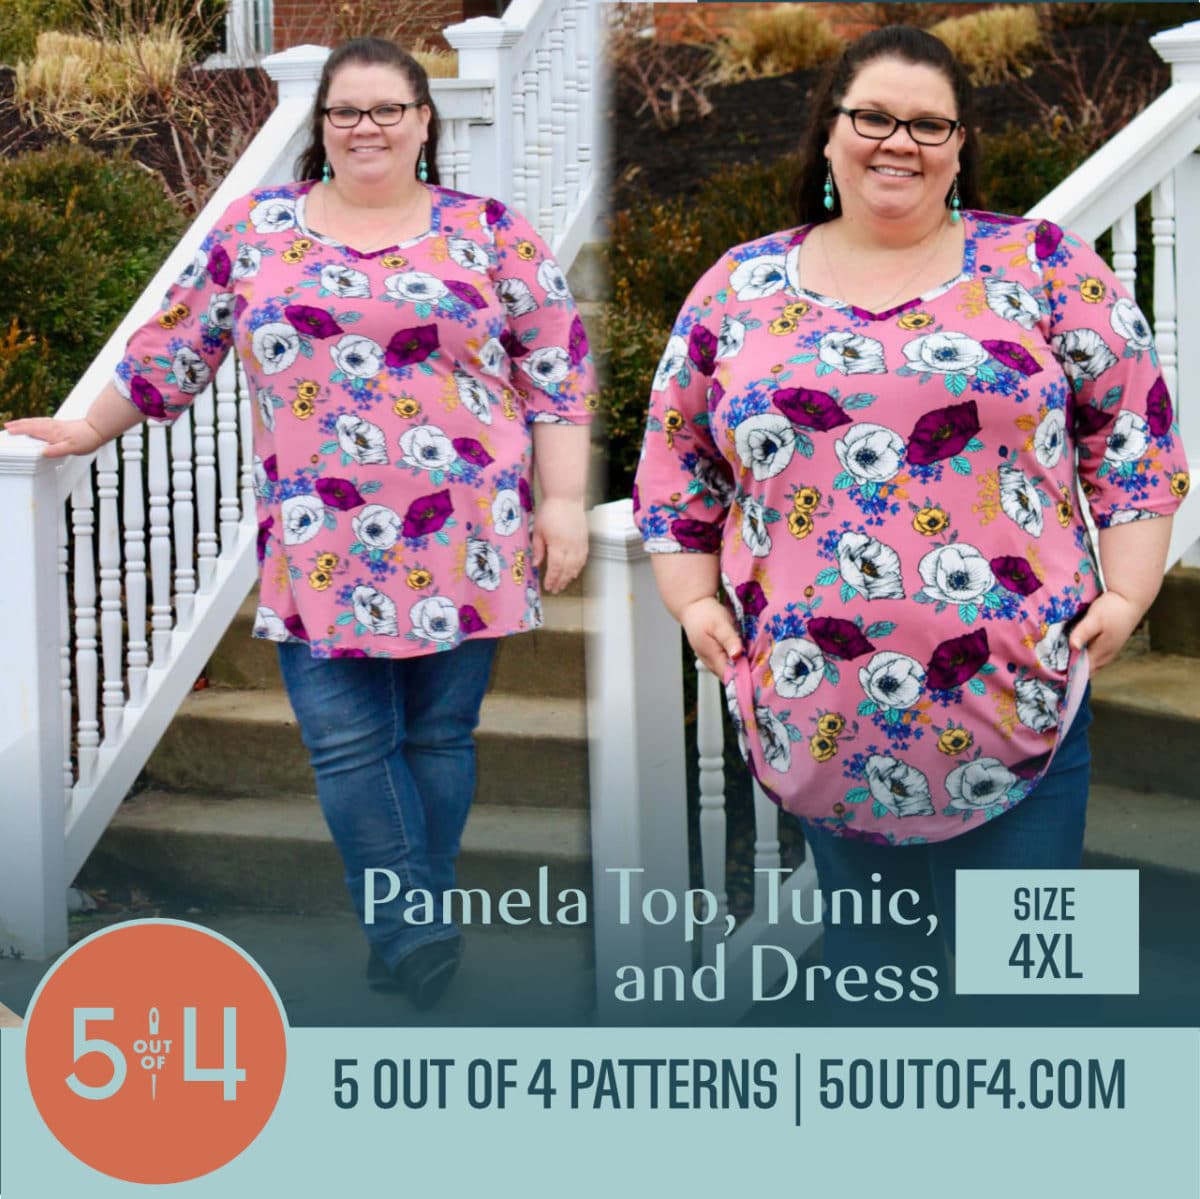 Pamela Top Tunic Dress Women's PDF Sewing Pattern